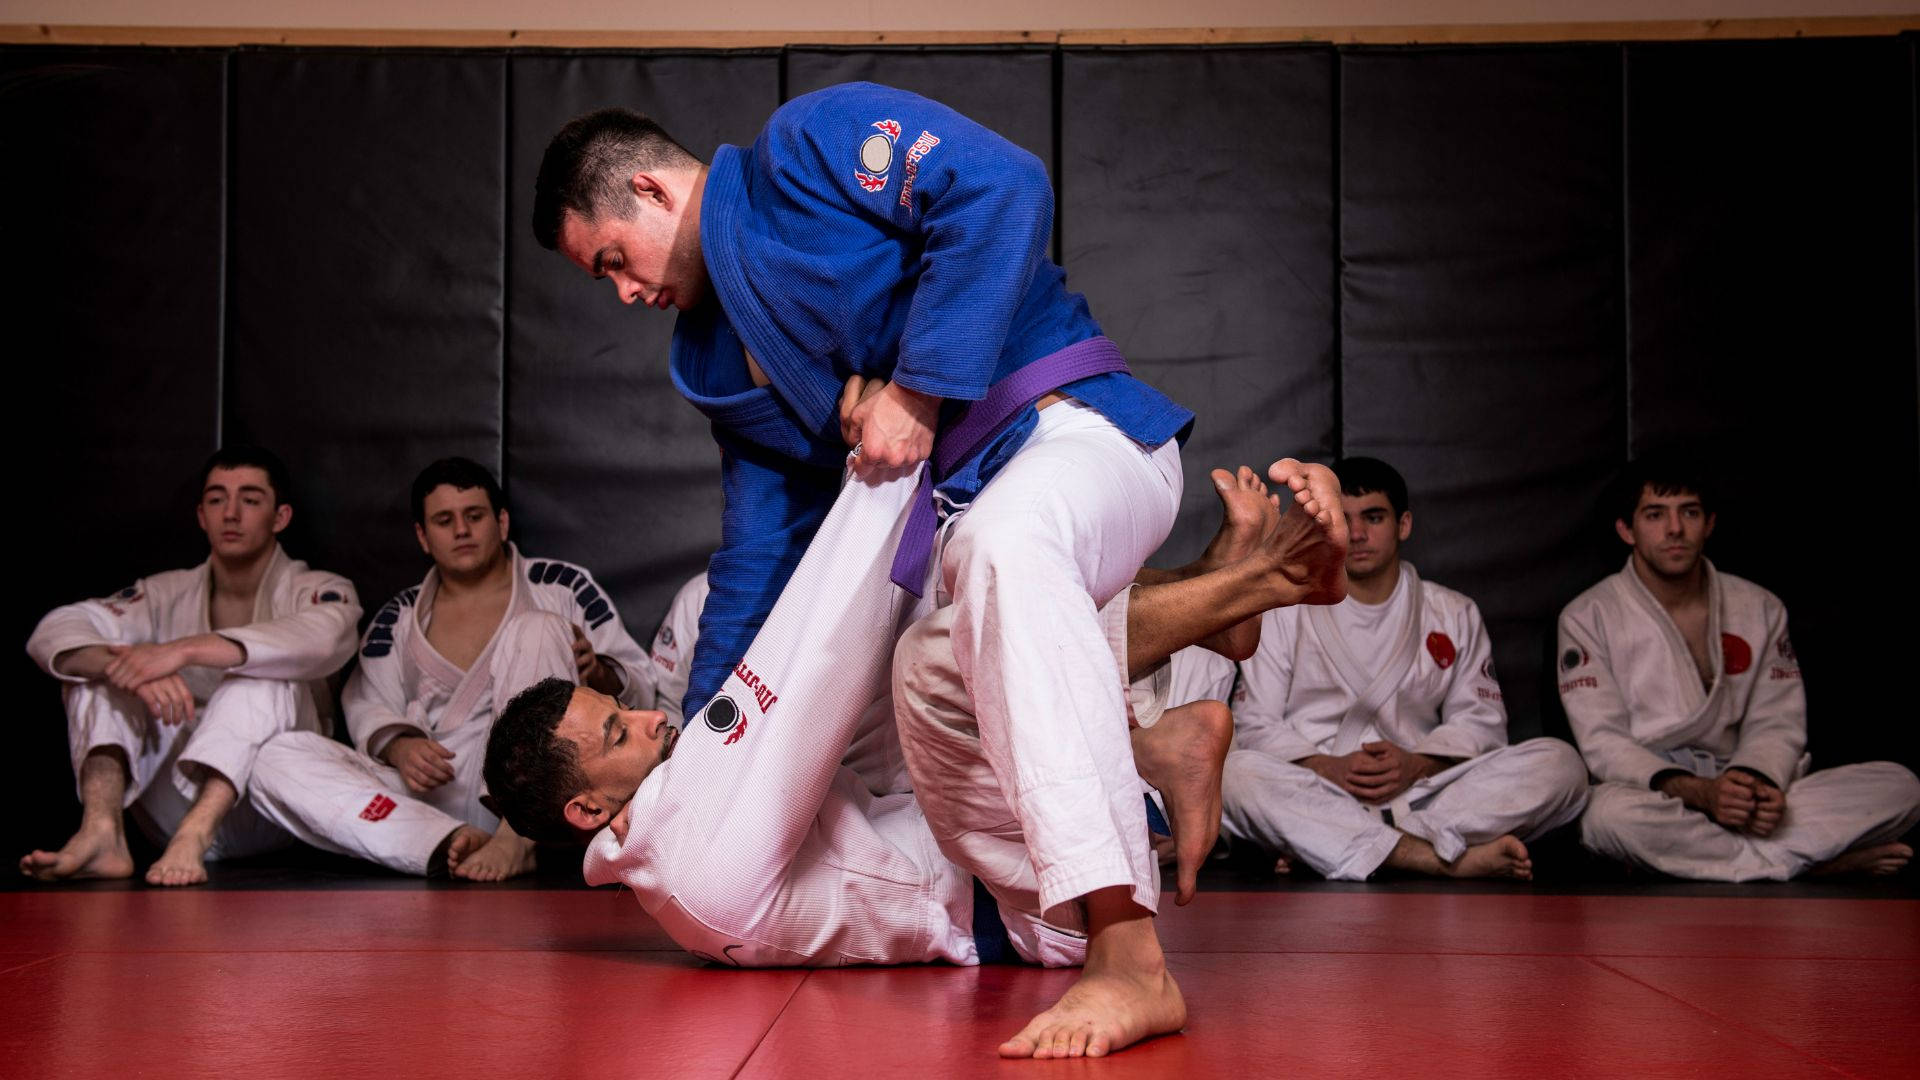 Disciplined And Focused Jiu-jitsu Fighters In Action Wallpaper